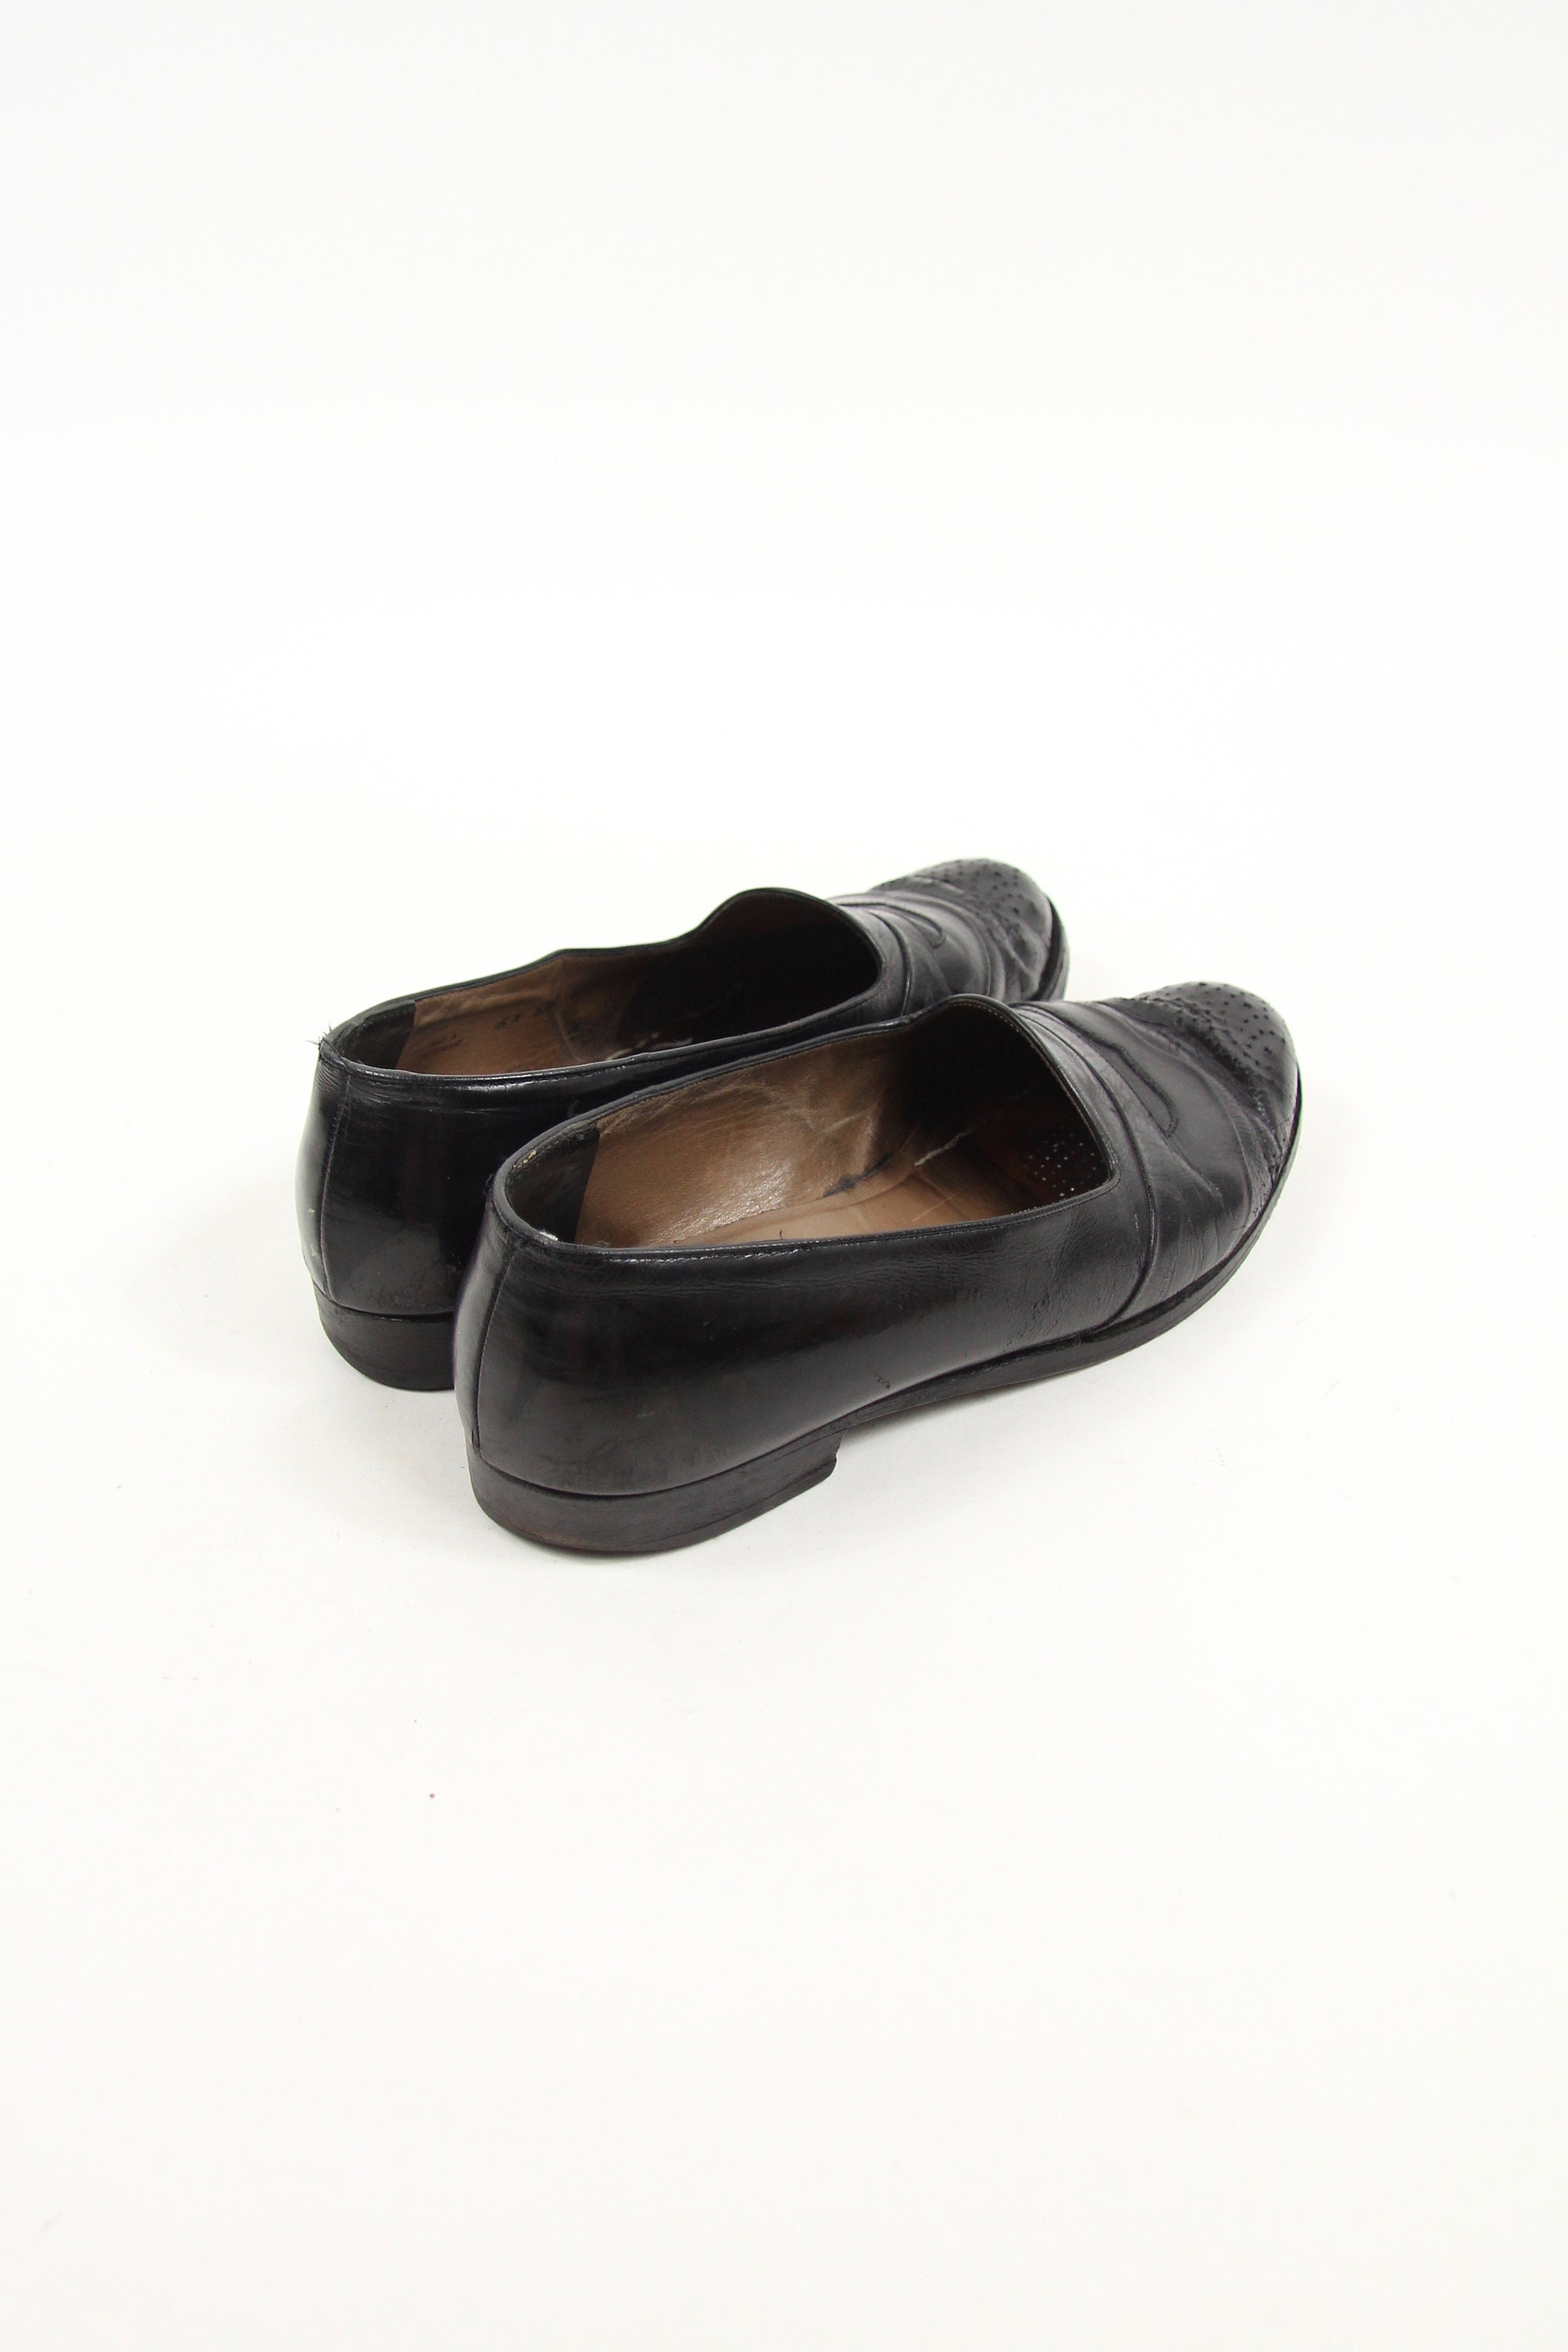 Bally Men's Slip On Black Dress Shoes Vintage Size 9.5 Made in Switzerland